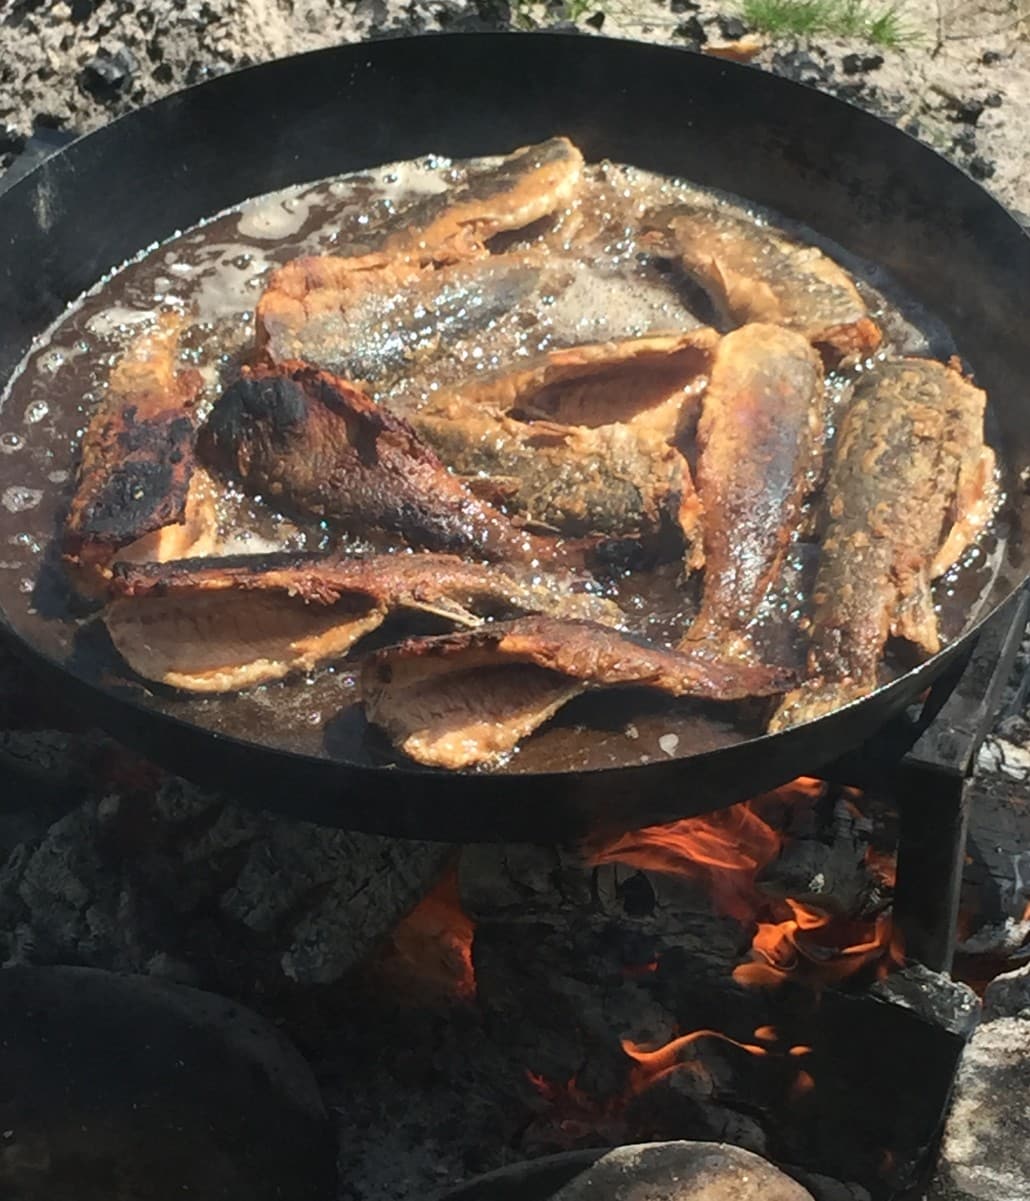 Fish fry at Mekoos